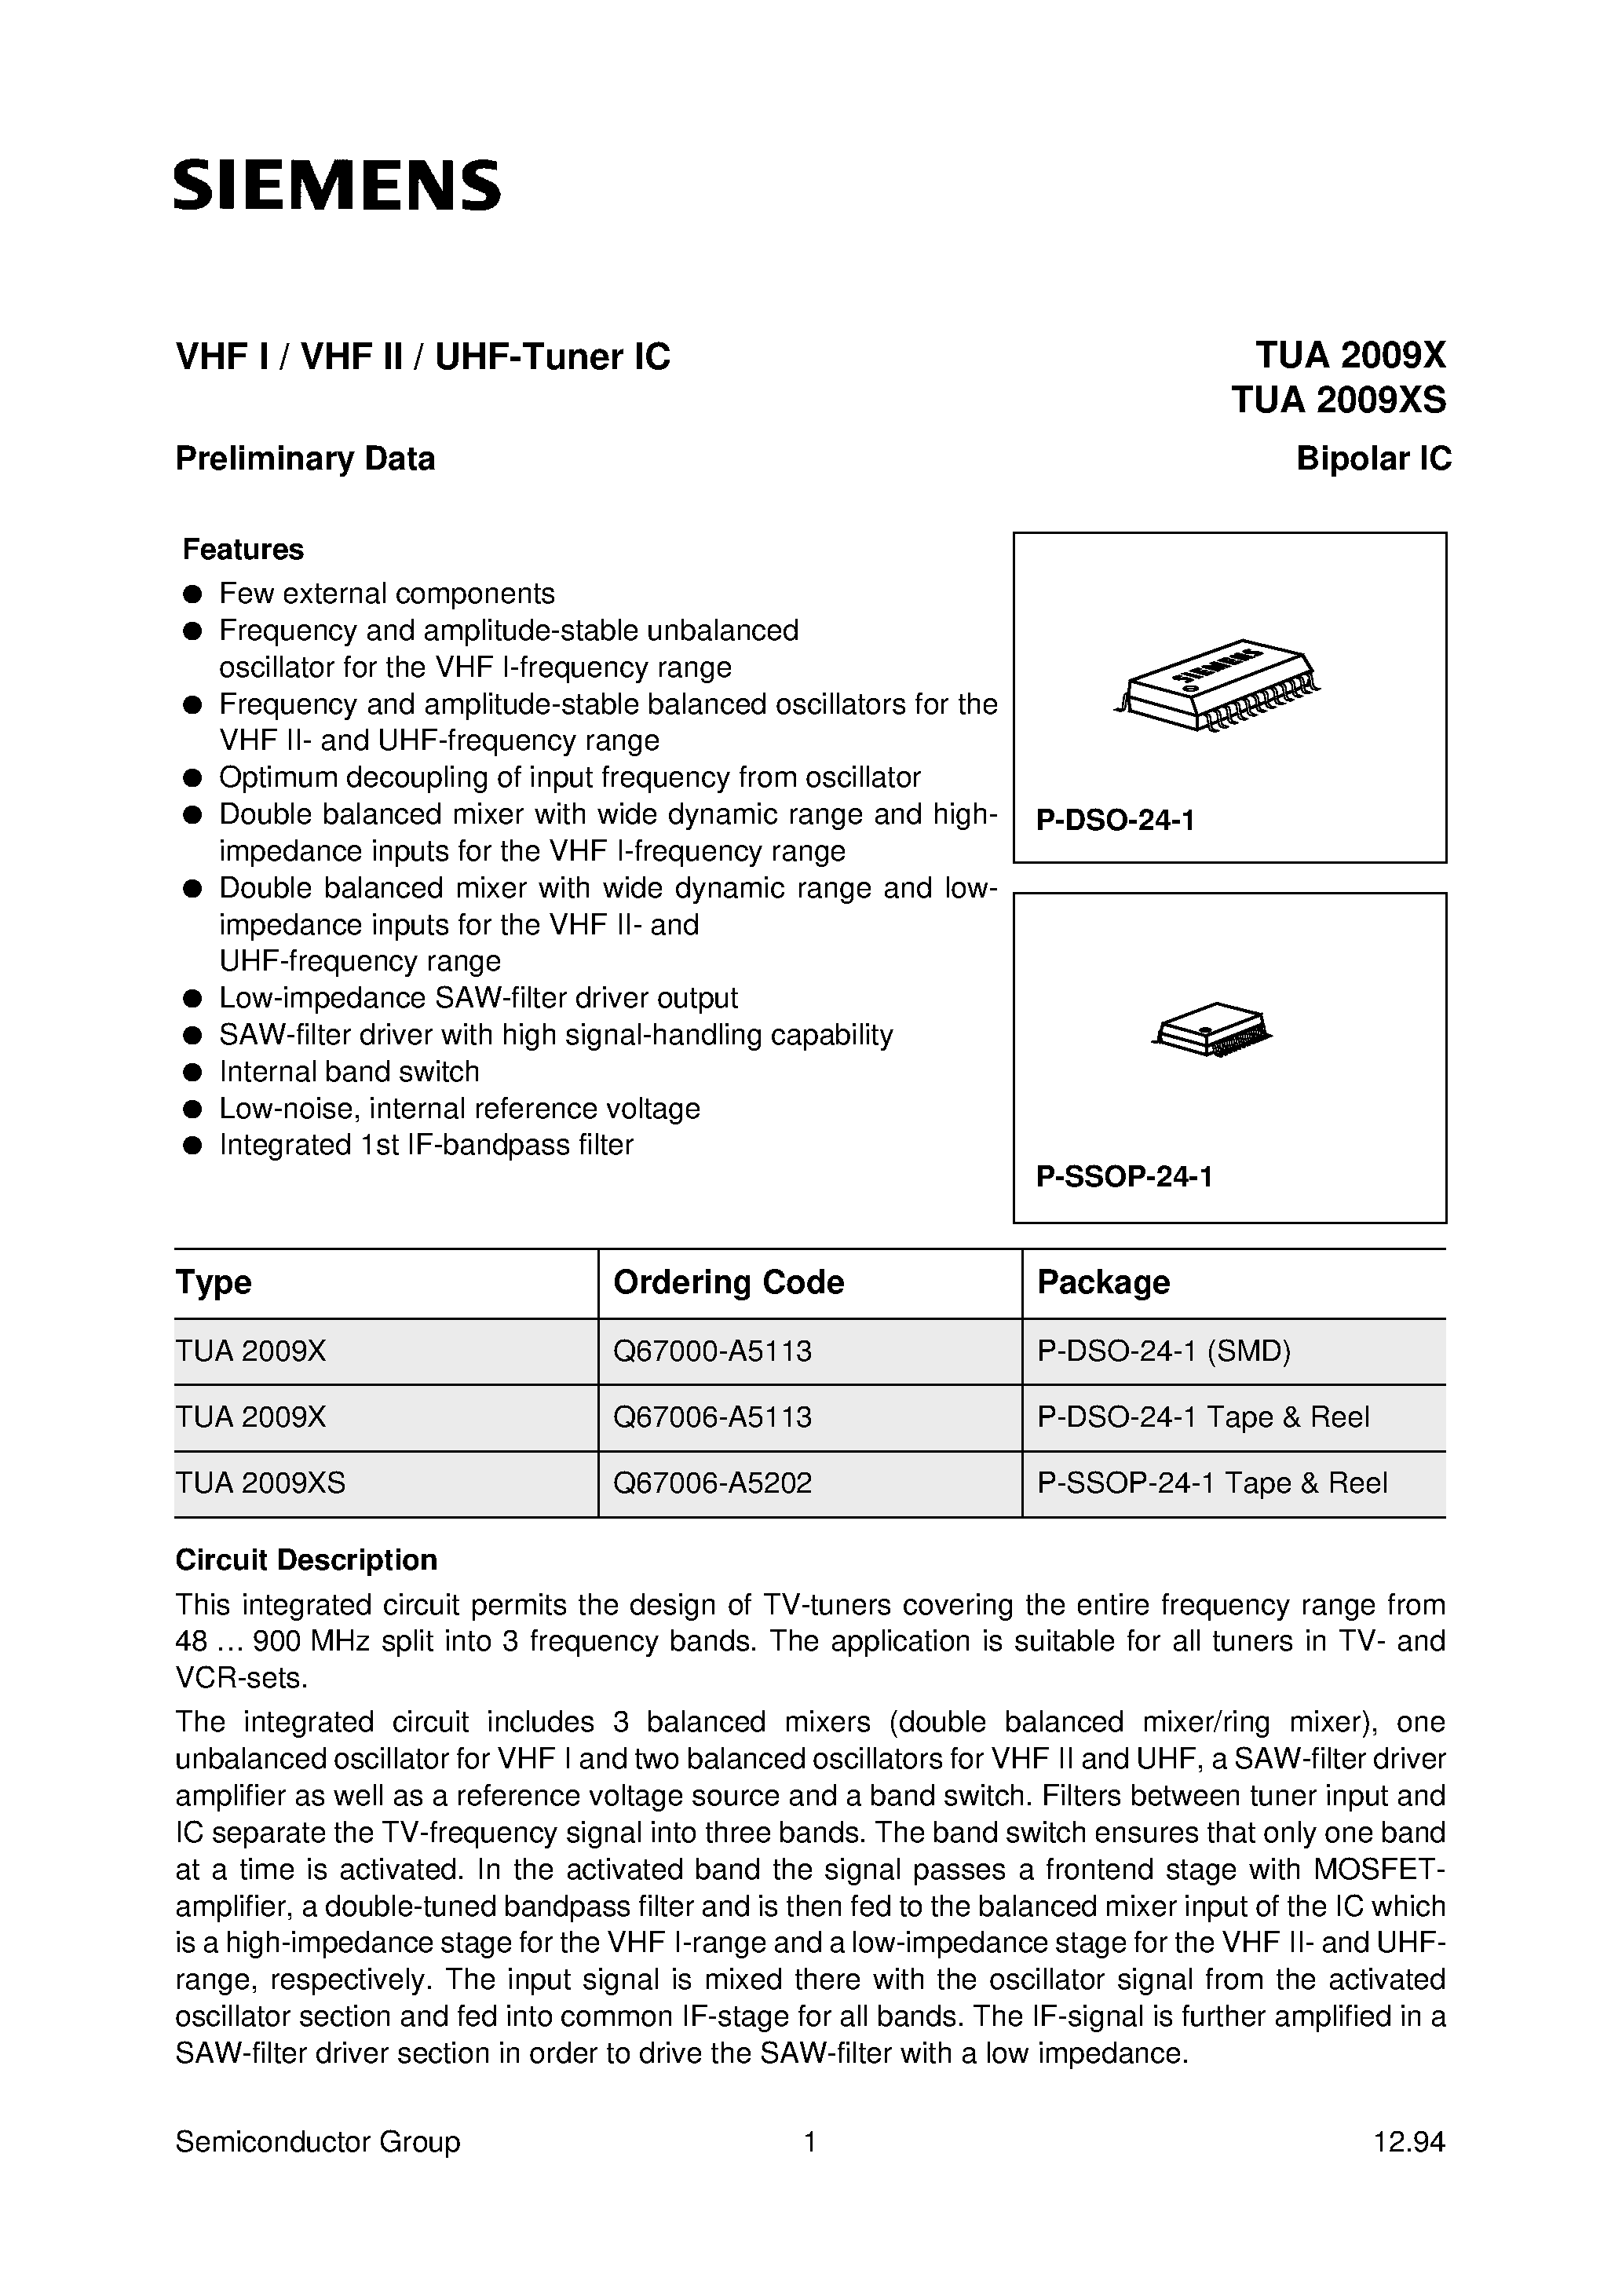 Datasheet TUA2009XS - VHF I / VHF II / UHF-Tuner IC page 1